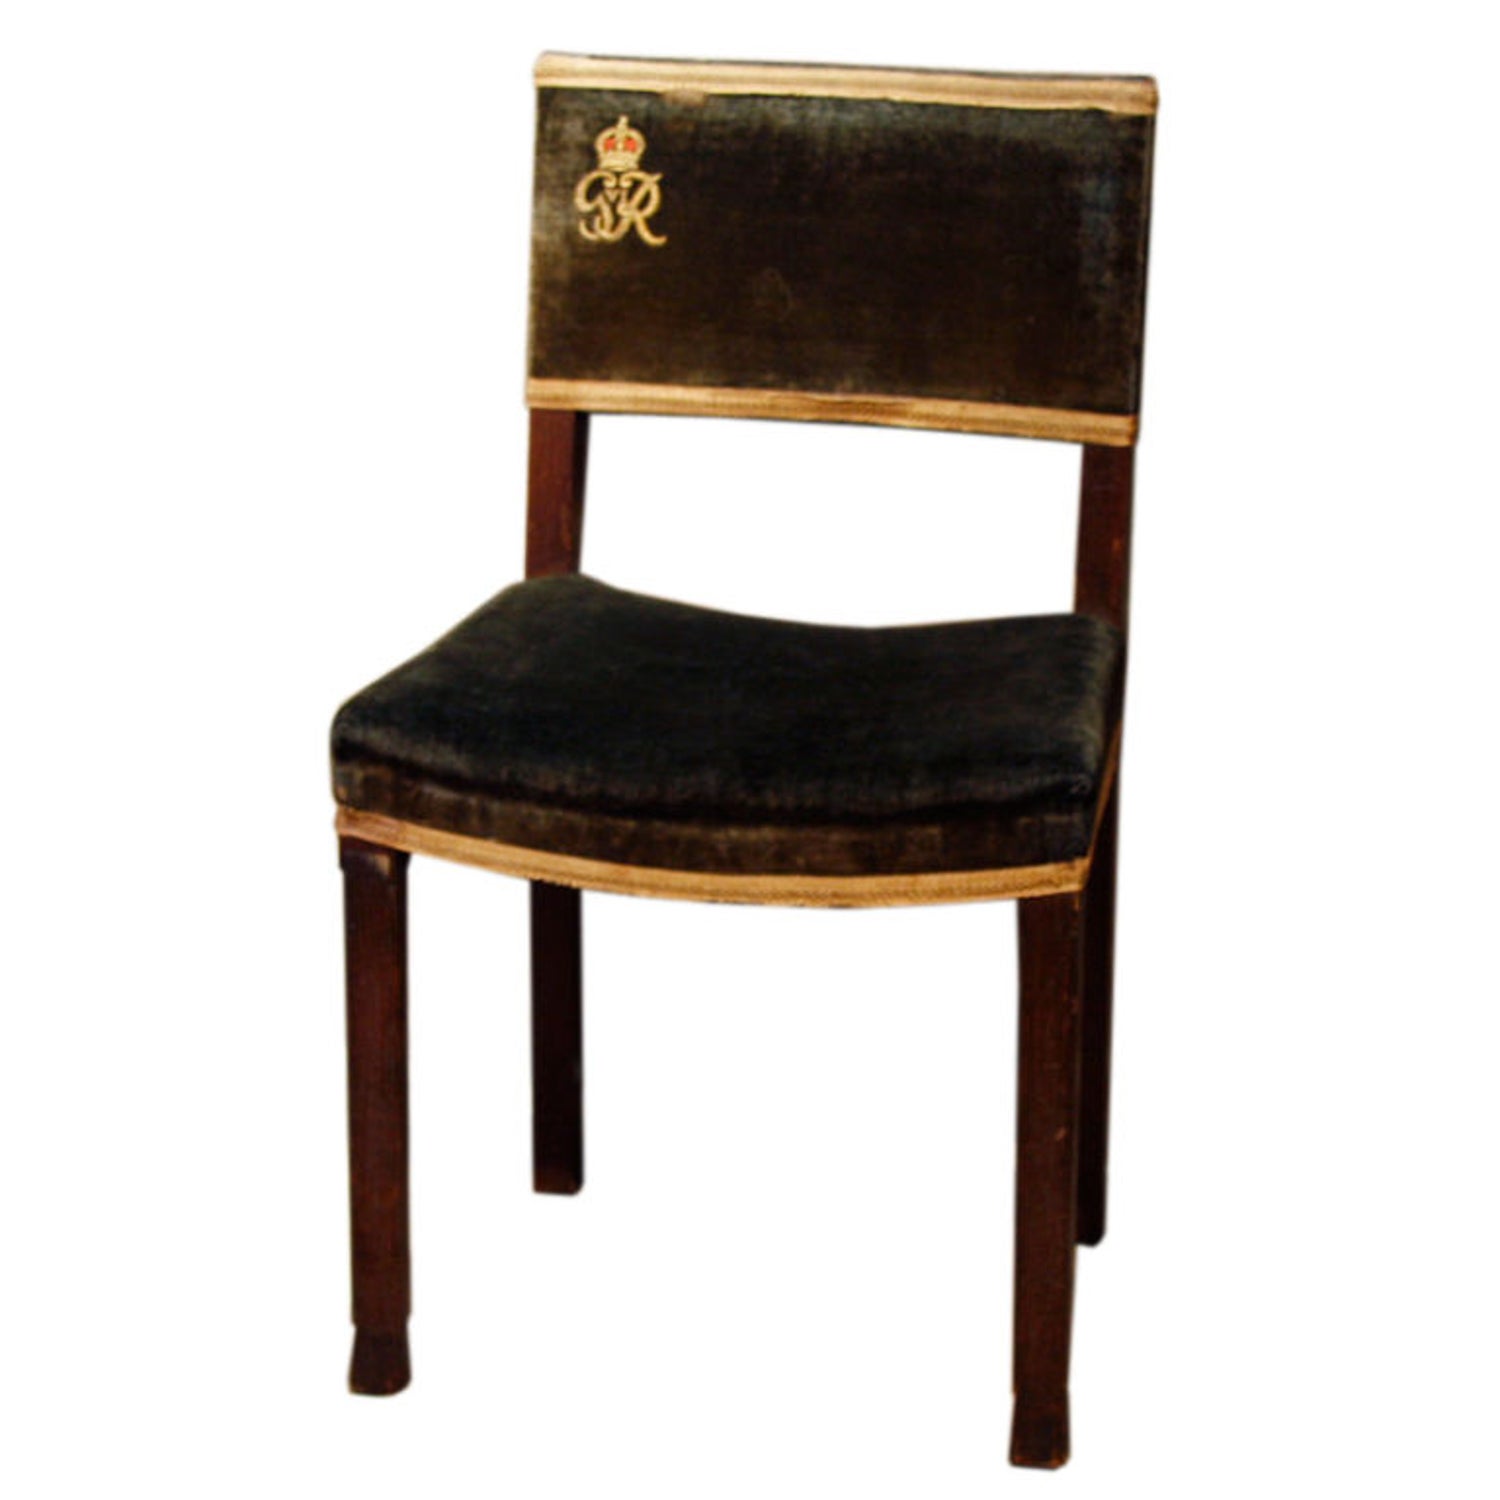 Coronation Chair Replica - KibrisPDR